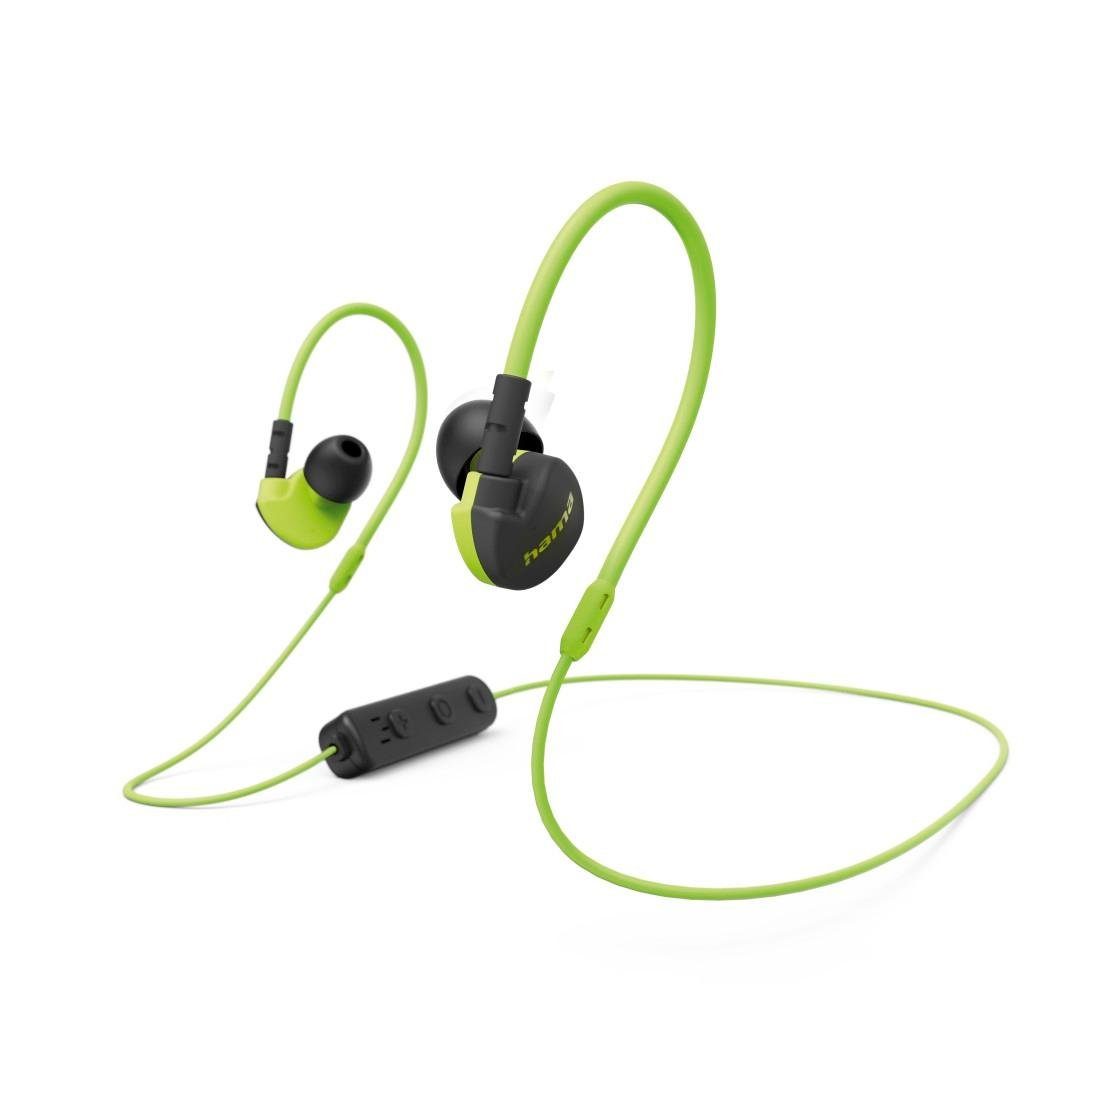 Mikrofon, In-Ear-Kopfhörer Assistant, ultraleicht, Sport, ergonomisch (Freisprechfunktion, Siri) Kopfhörer In-Ear, Hama gelb Bluetooth Google